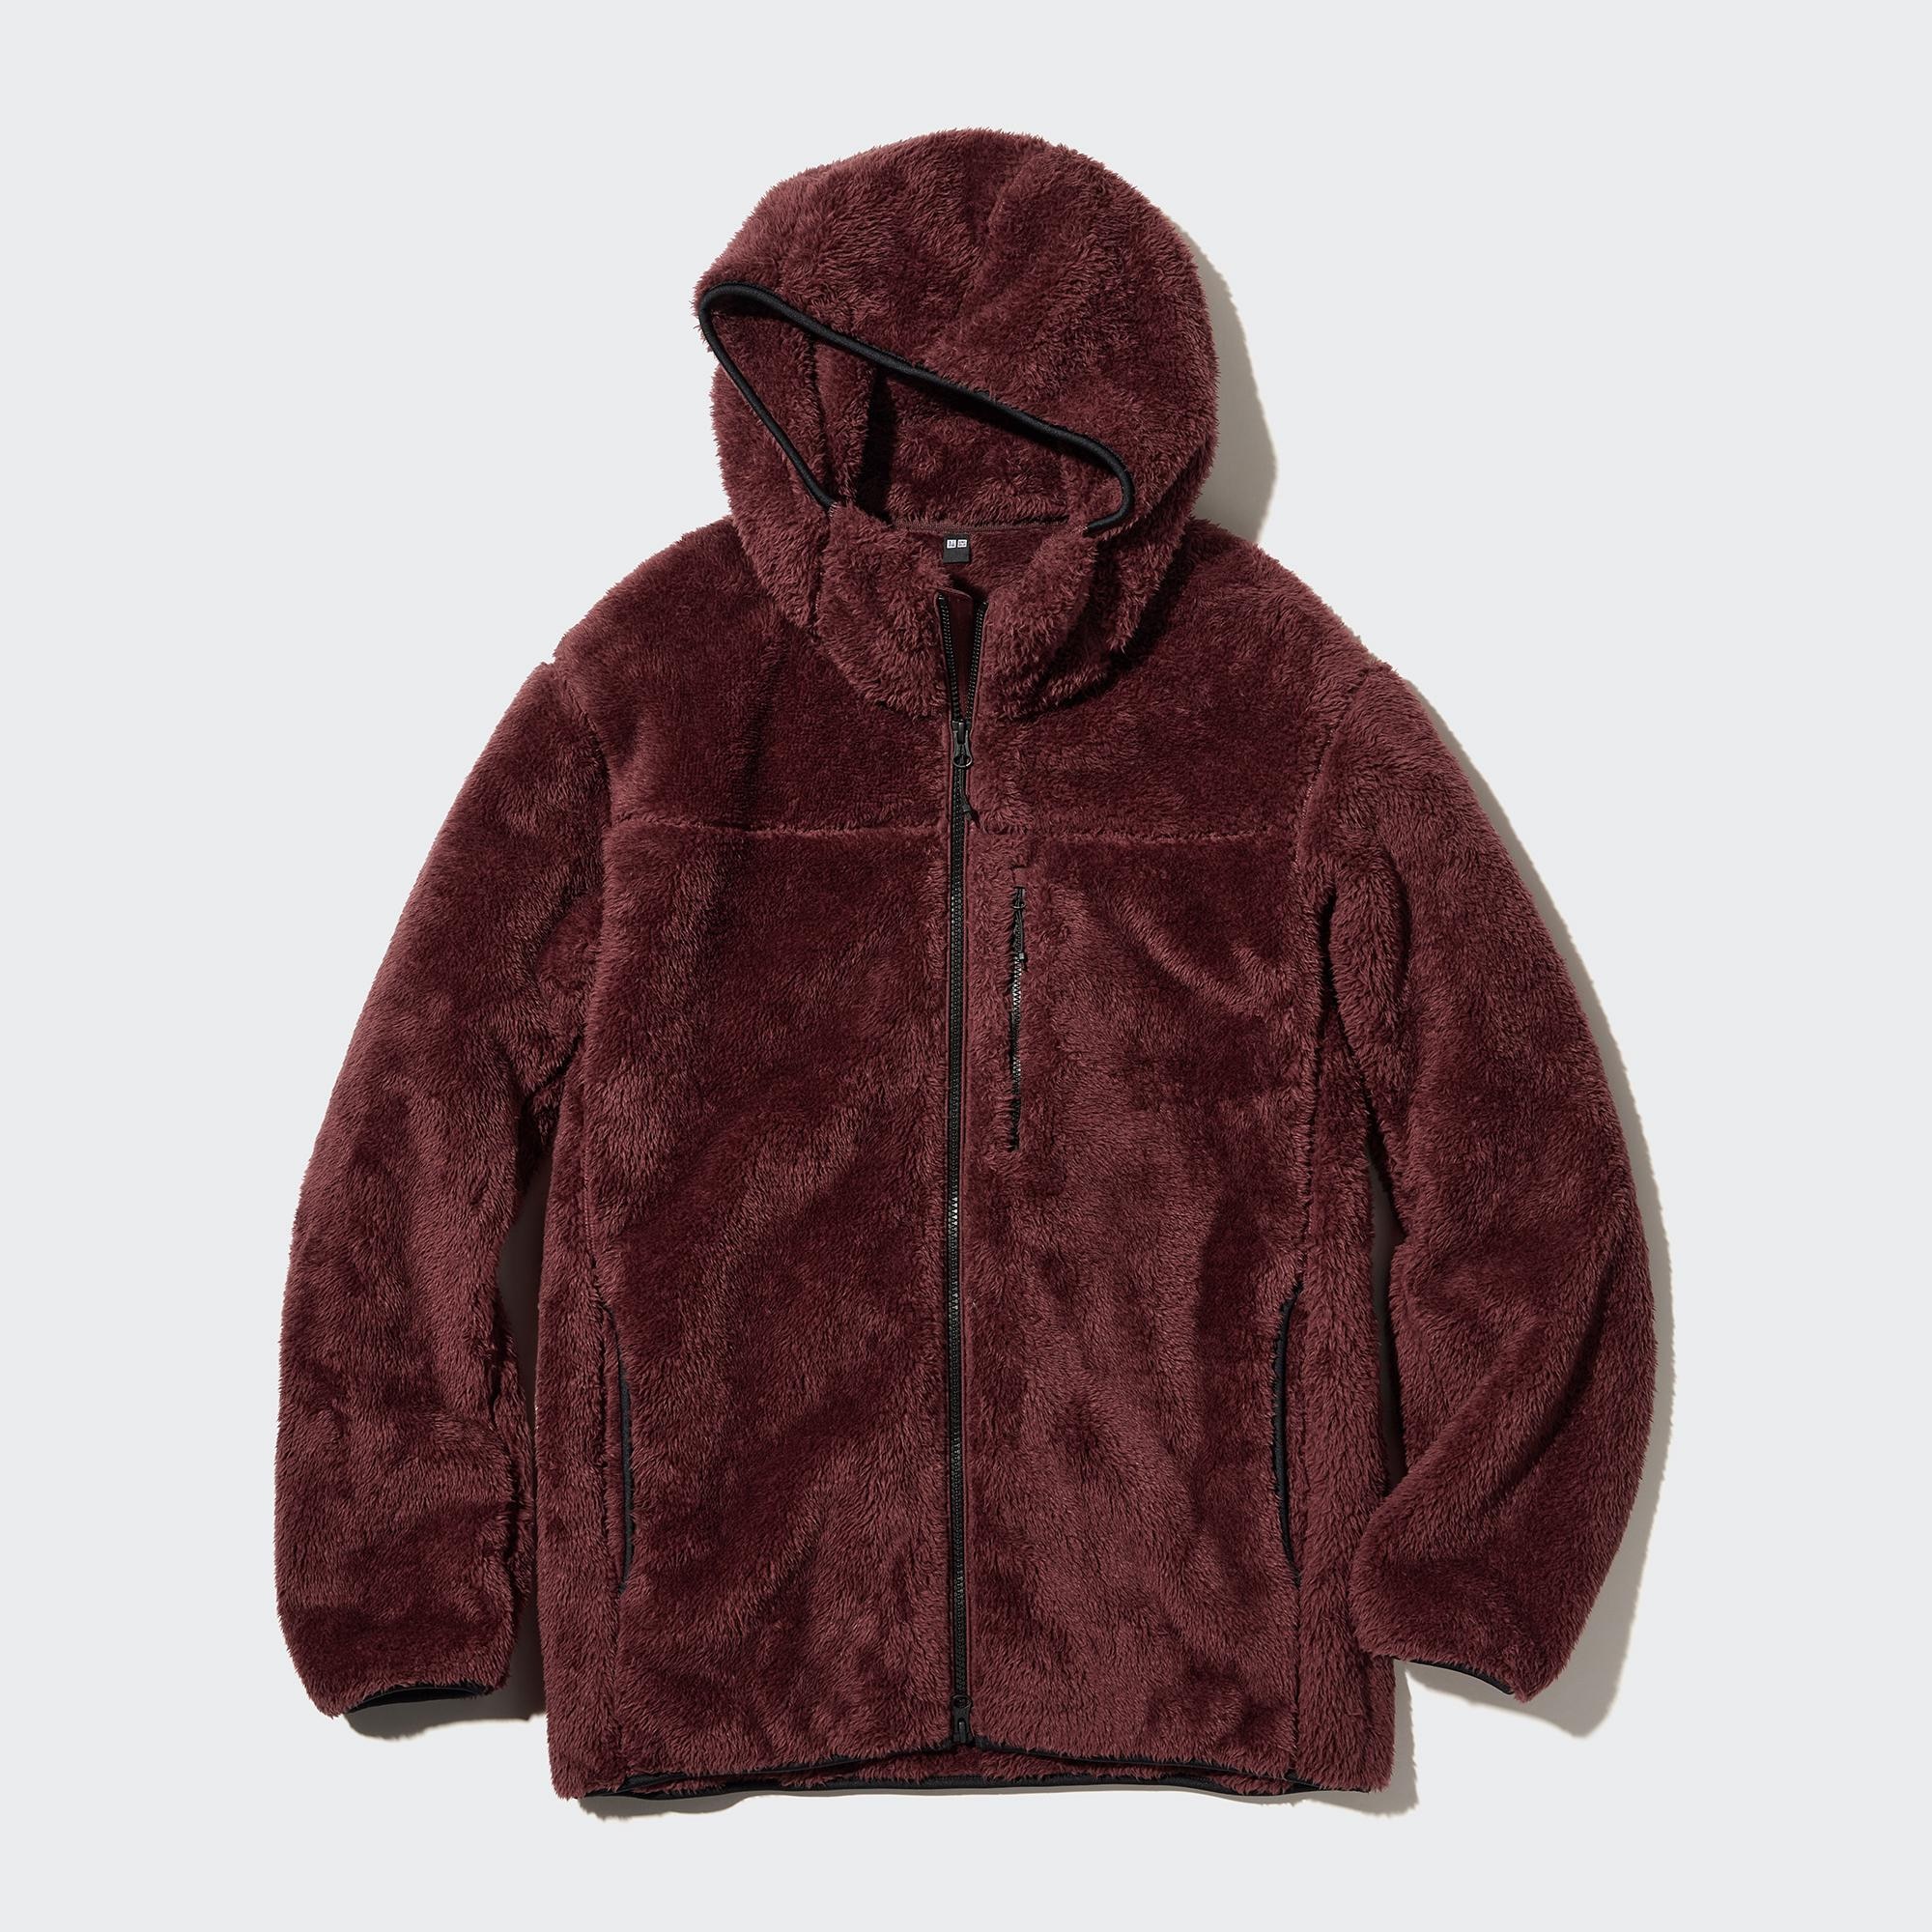 European Style Double Sided Woolen Furry Long Fleece Coat For Men Long Warm  Winter Coat With Plush Lining F70991 201116 From Bai06, $62.68